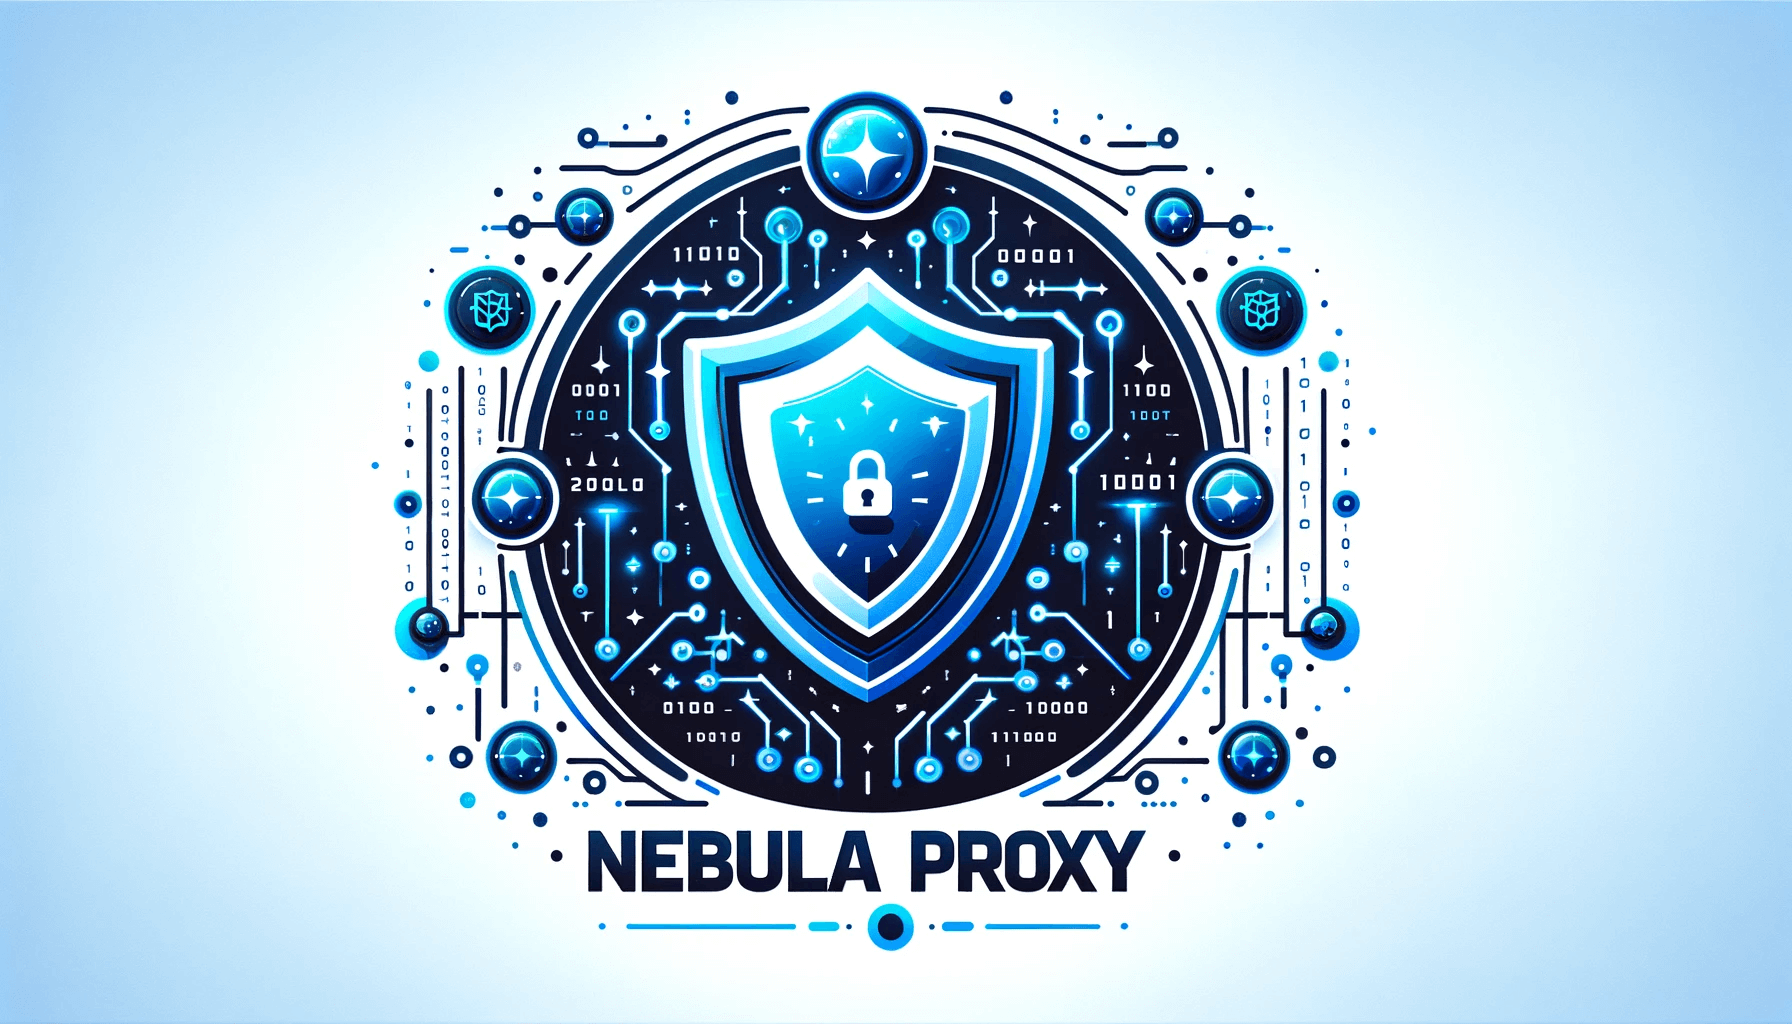 How to Use Nebula Proxy